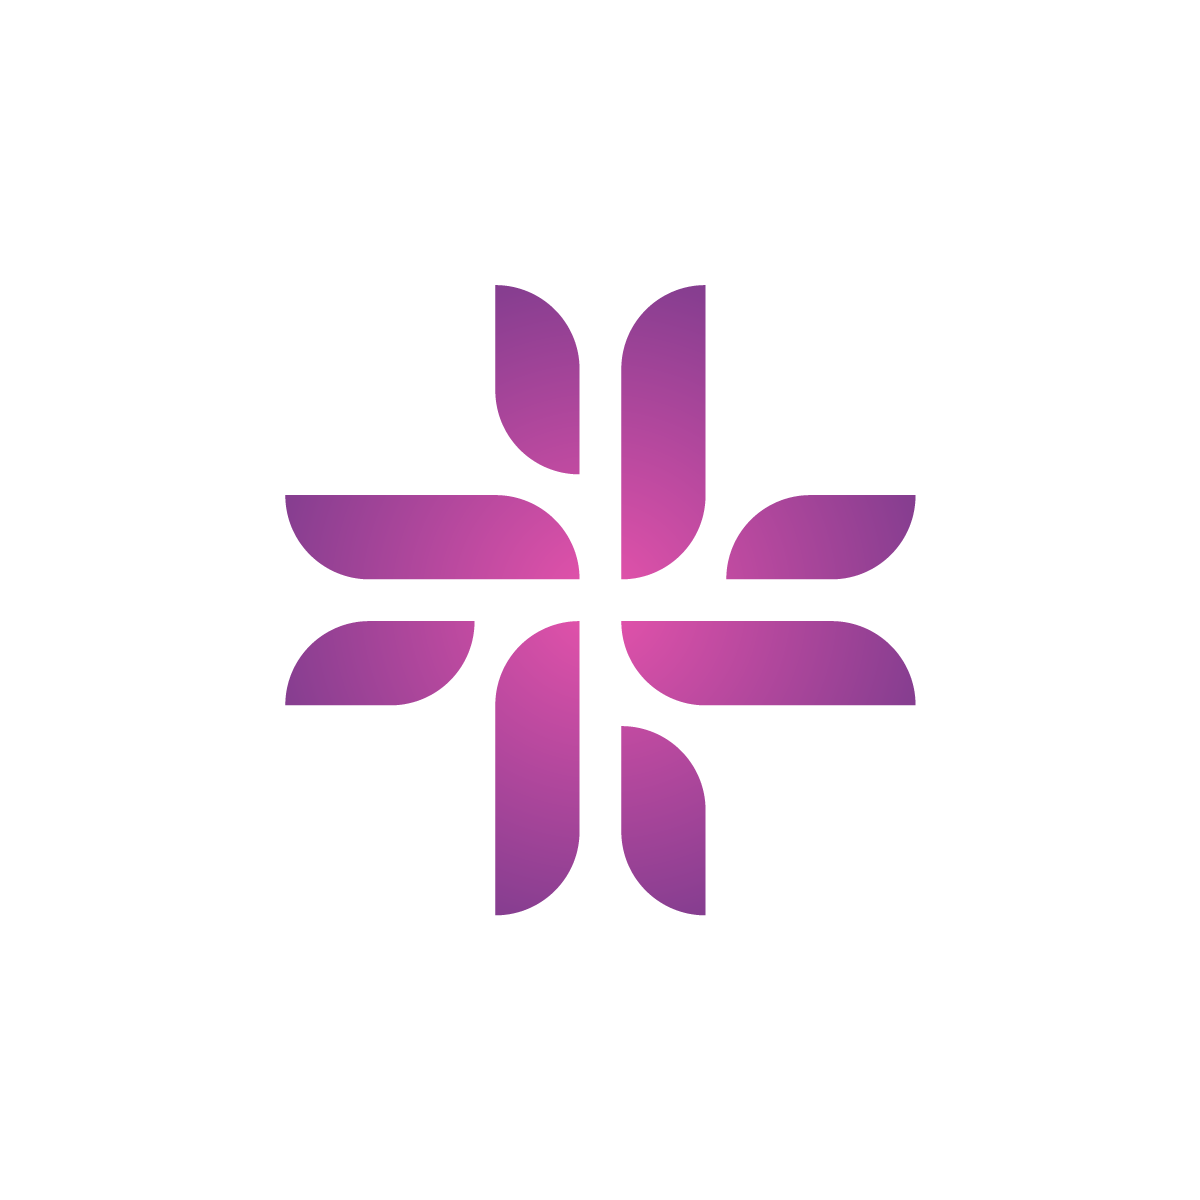 Medical Flower Logo: Cross design with multiple flower petals.